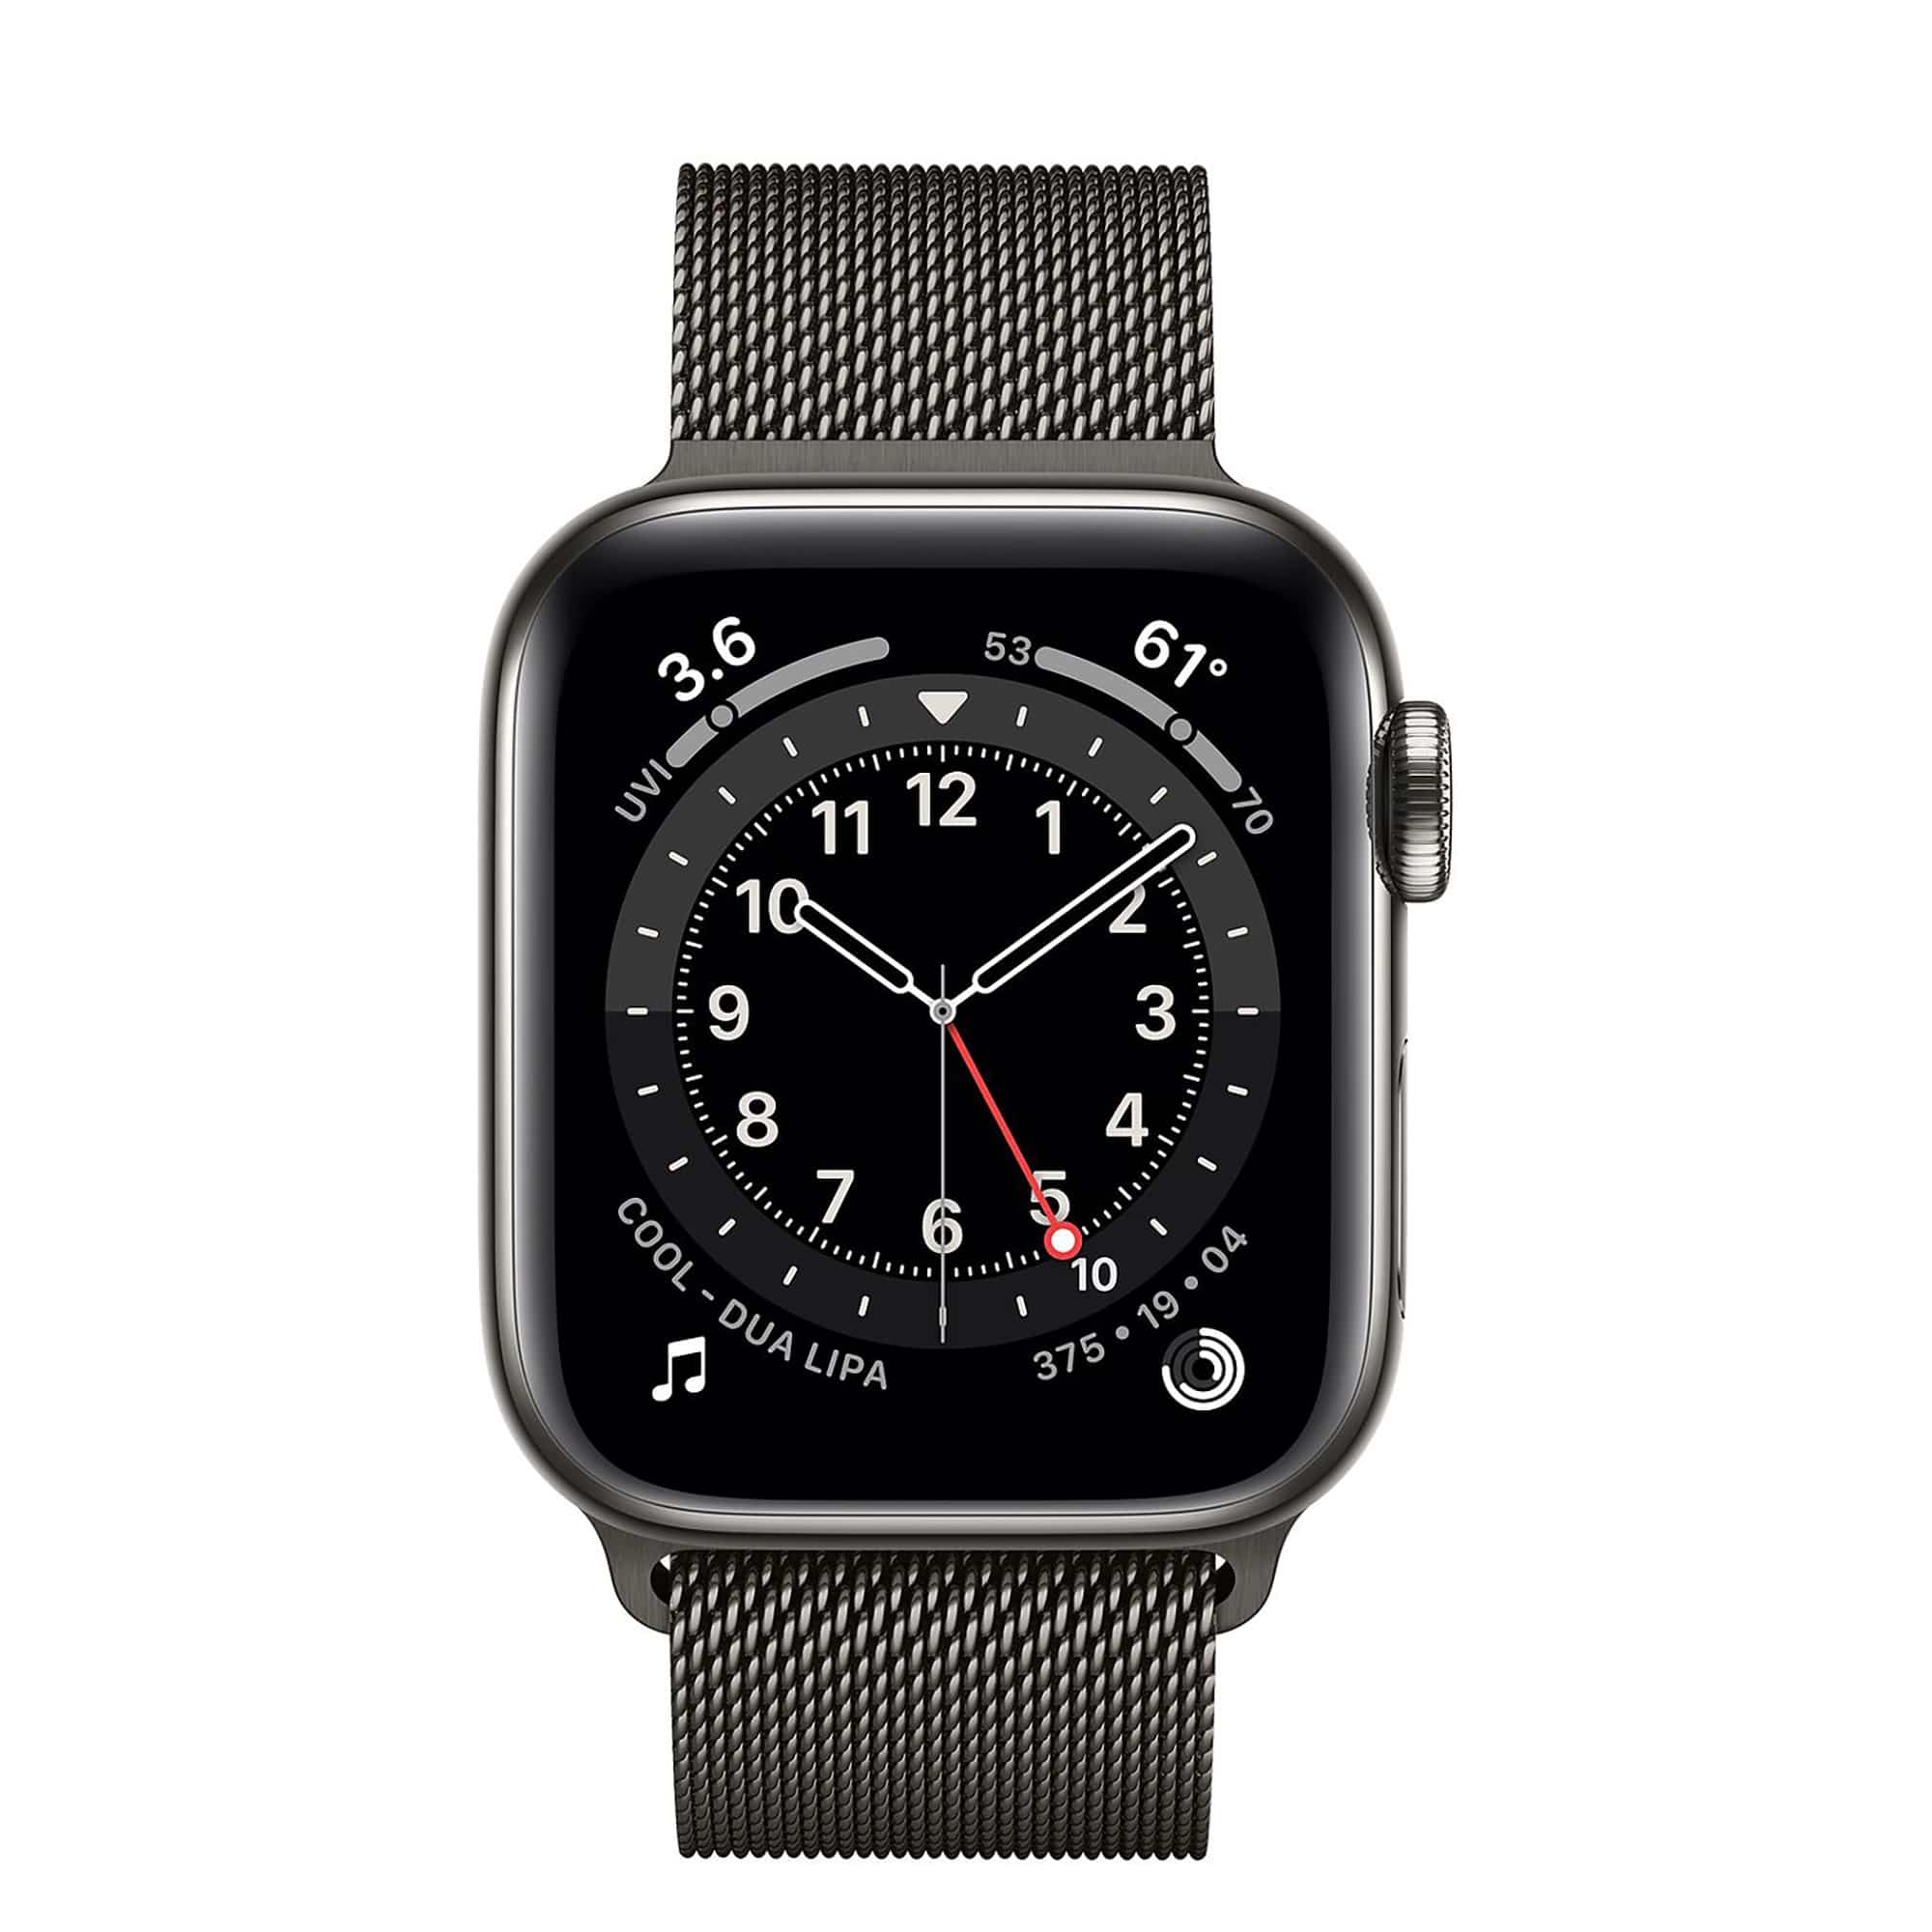 Apple Watch Series 6 Graphite Stainless Steel Case with Graphite Graphite Stainless Steel Apple Watch